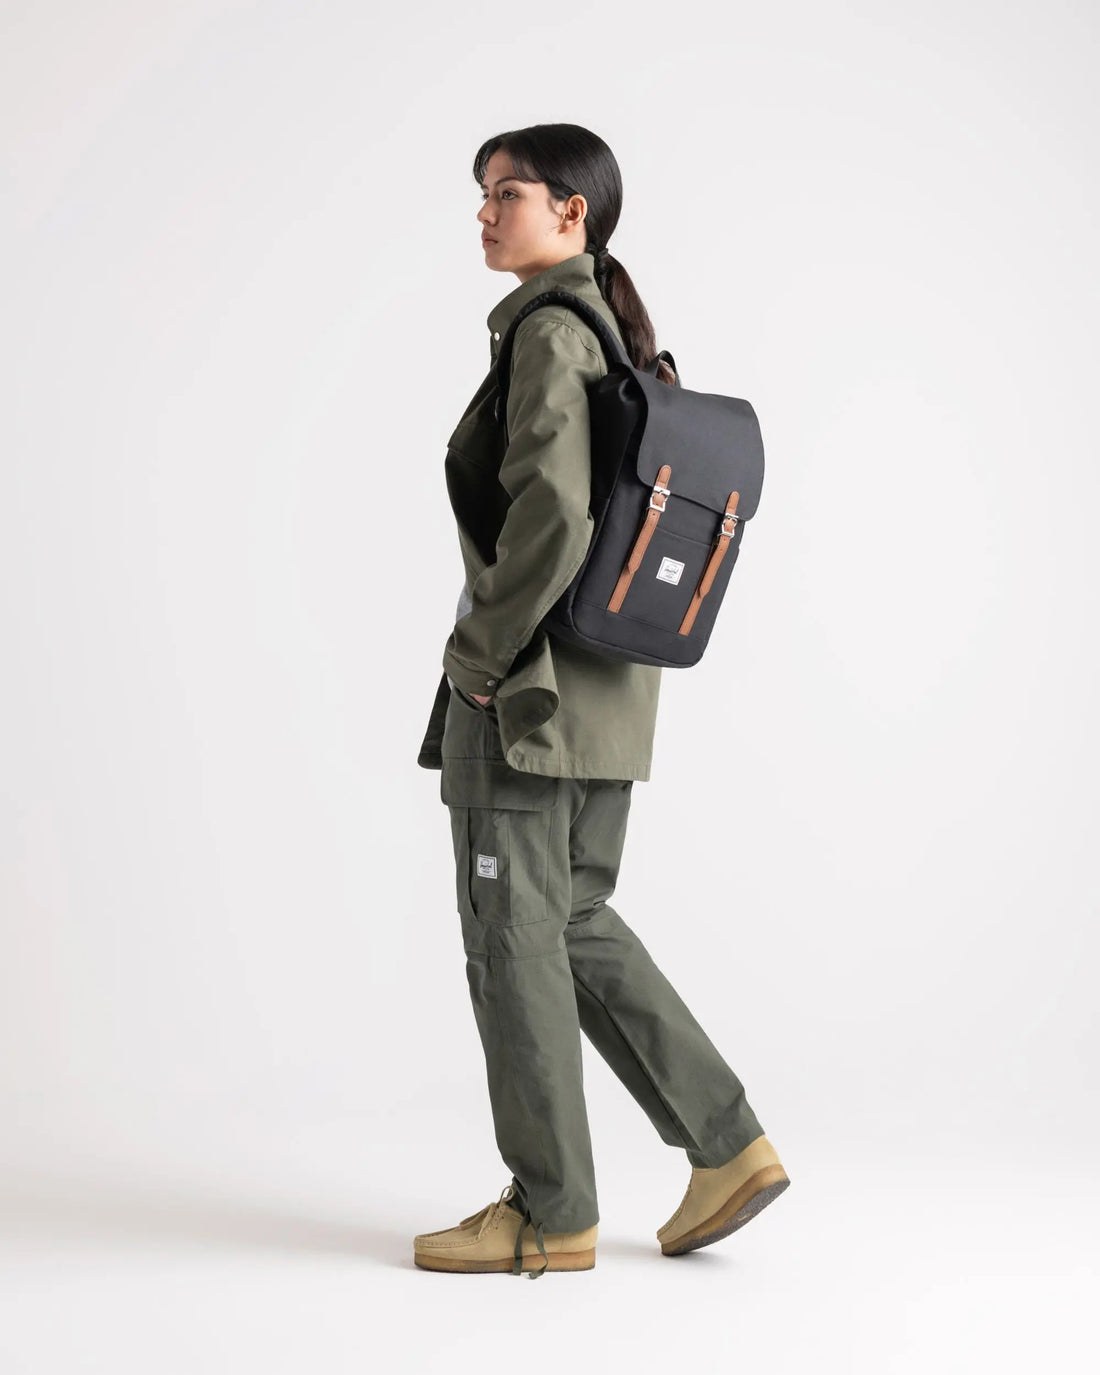 Retreat Backpack | Small-Backpack-Herschel Supply Co-Port-SchoolBagsAndStuff